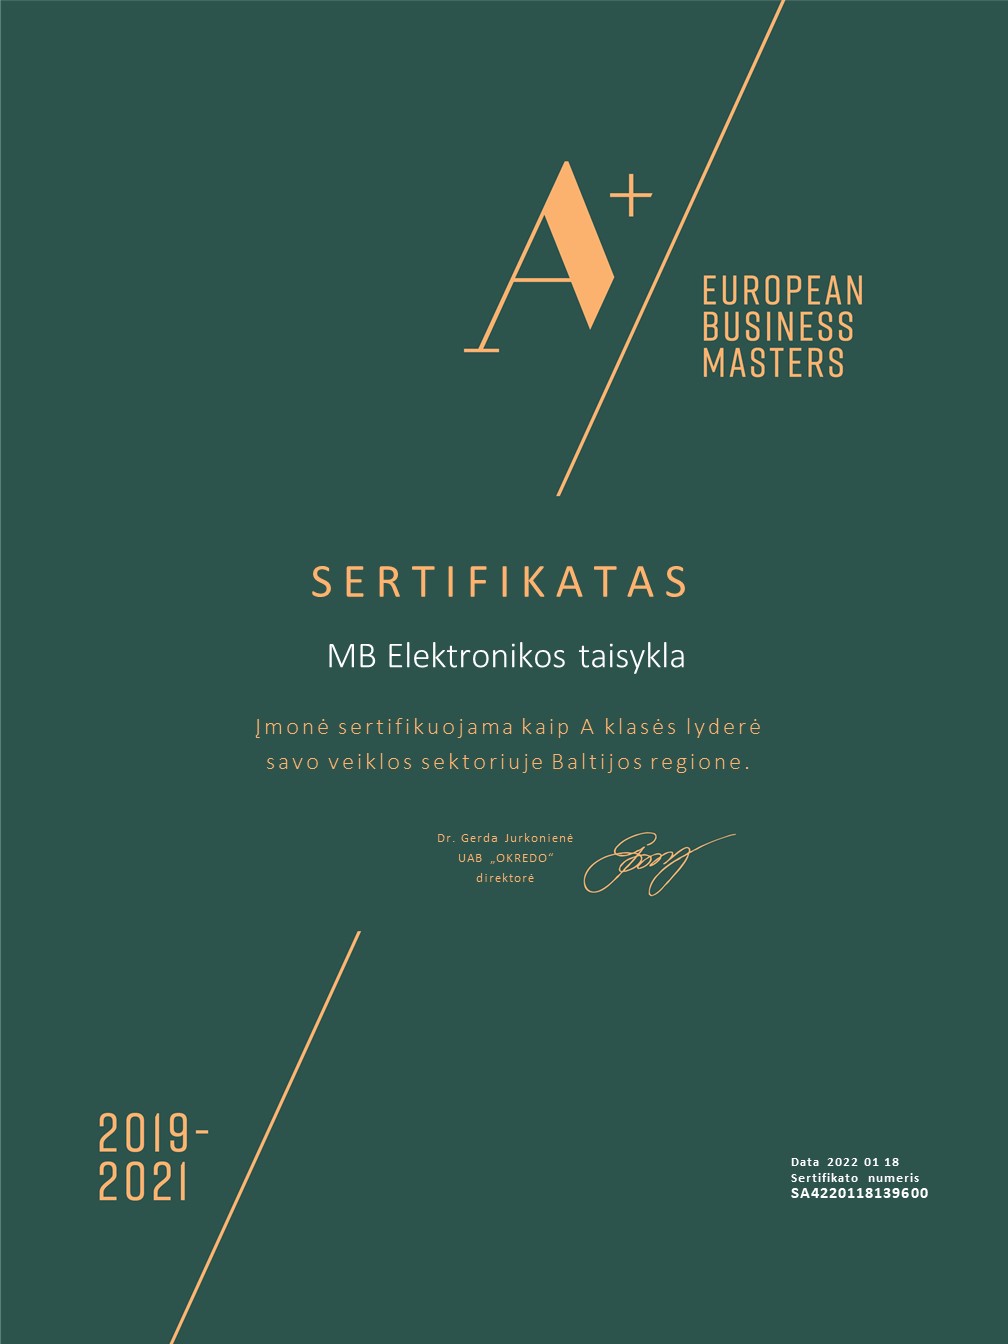 Abalt sertifikatas 2019-2021